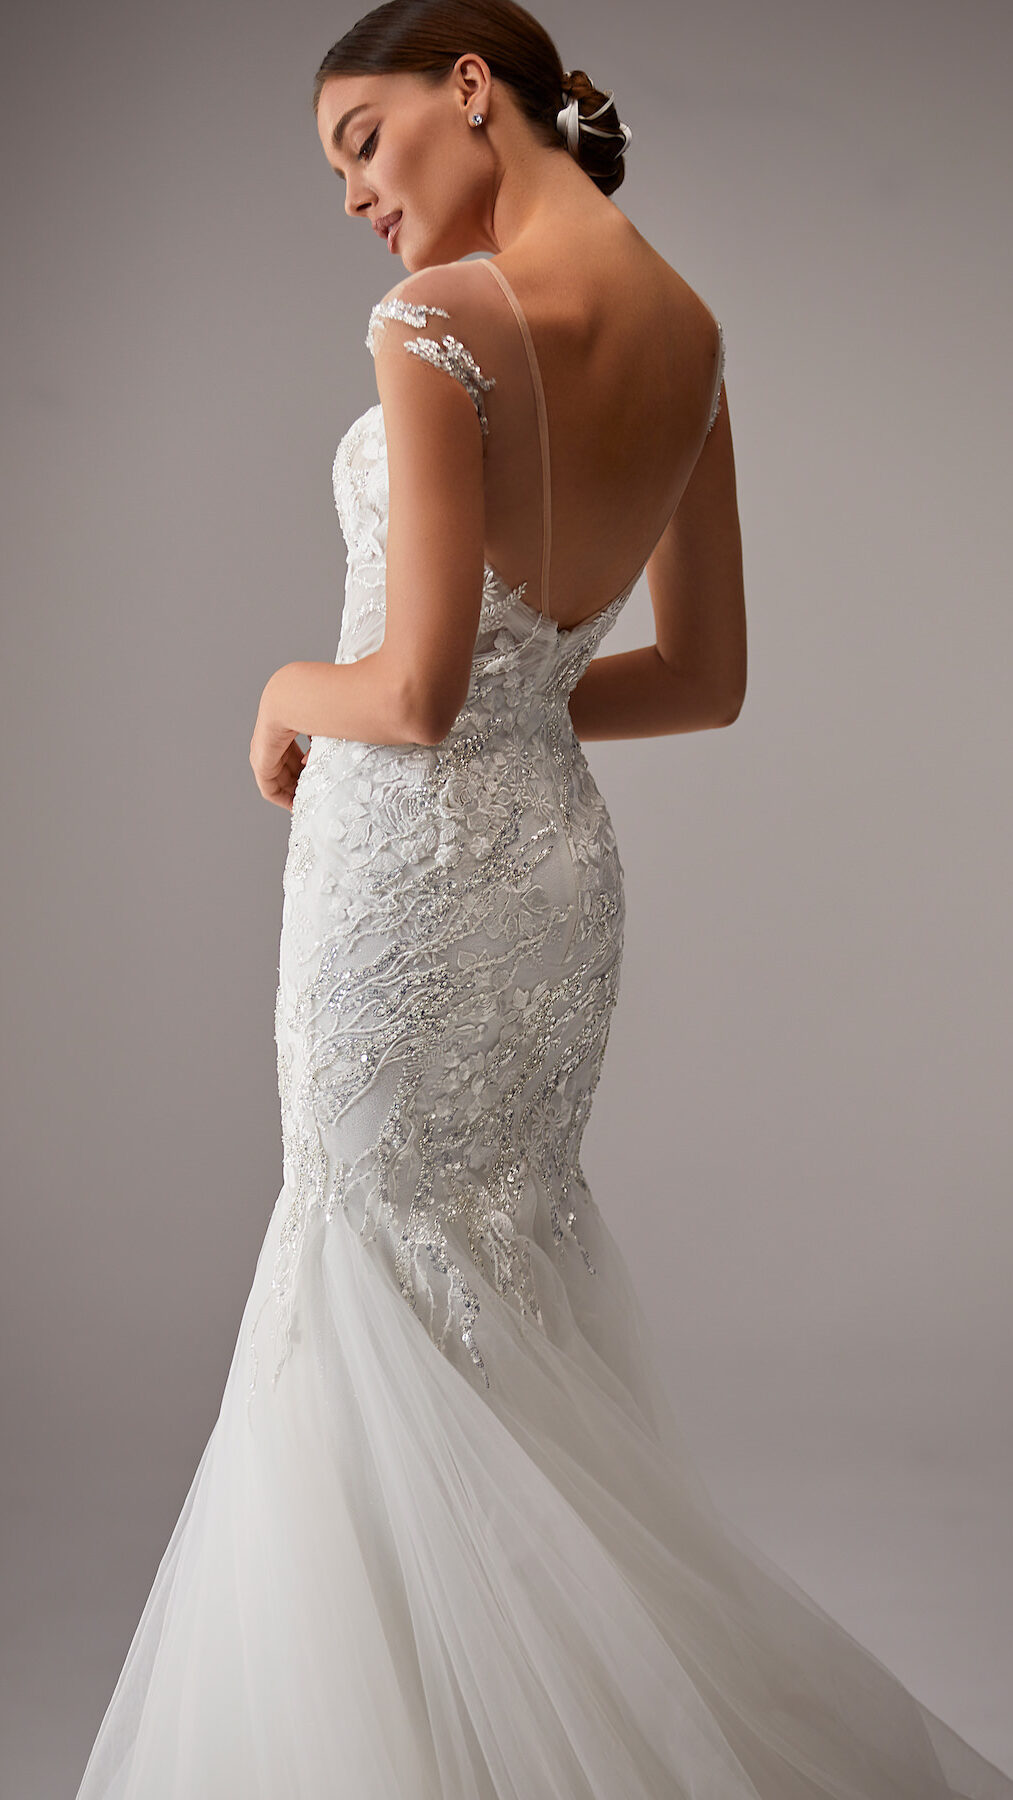 Lace mermaid Wedding Dress by Milla Nova - Adamma White Lace